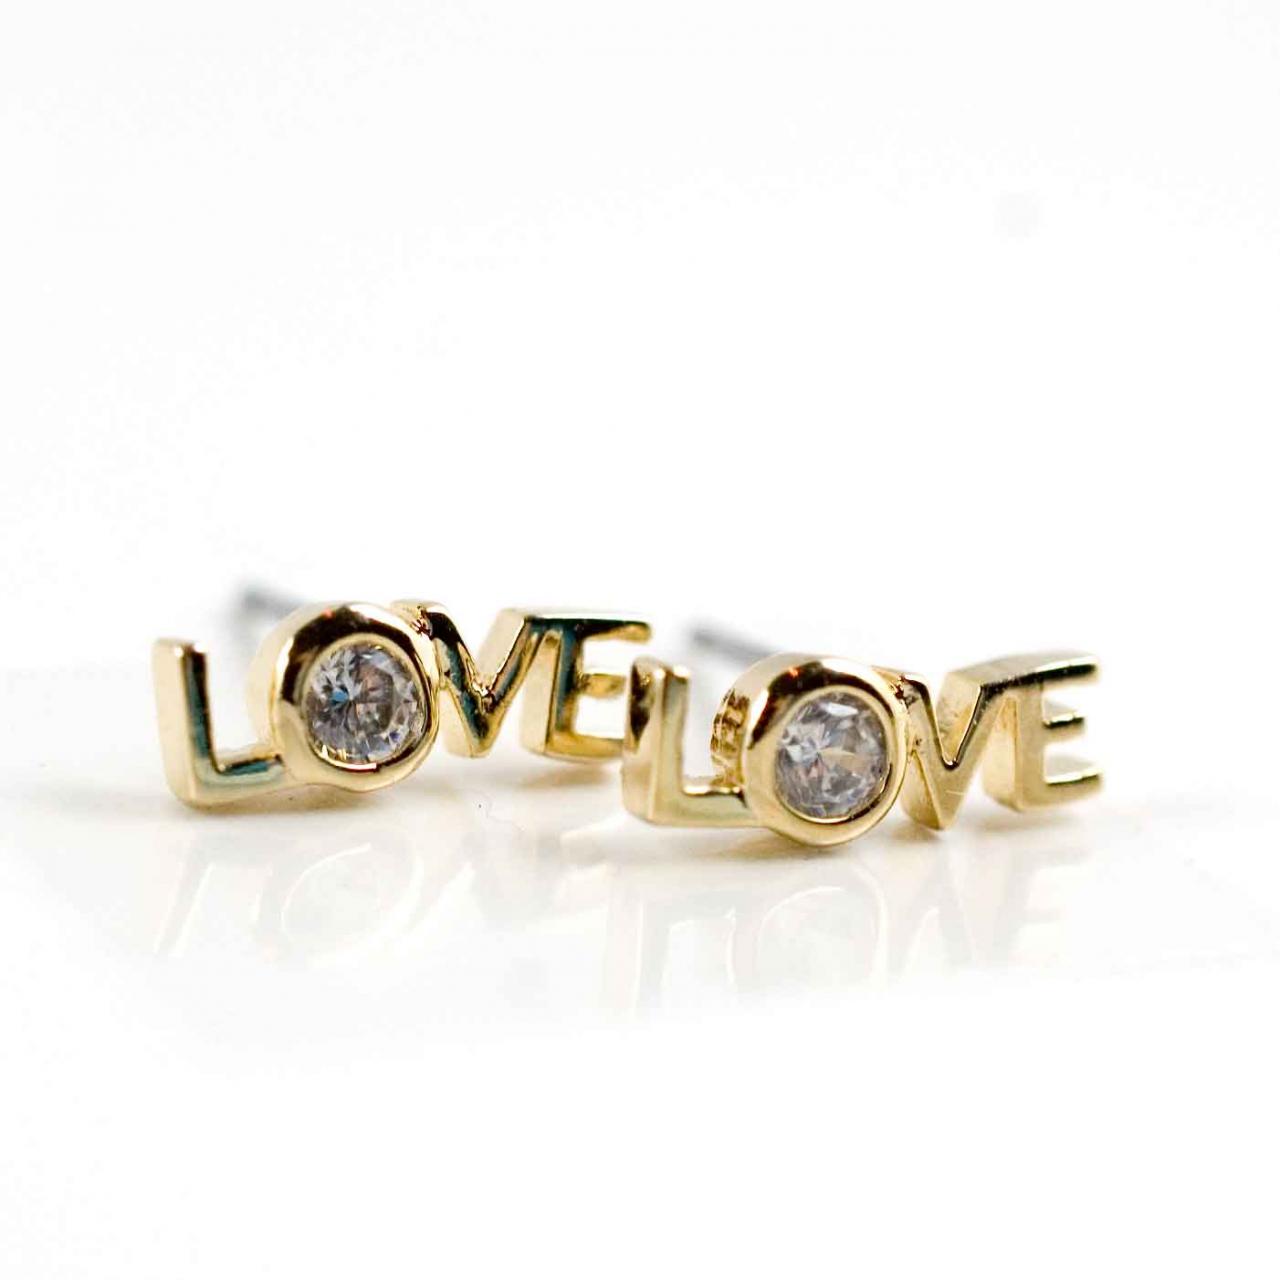 Love Earrings Gold With Rhinestone